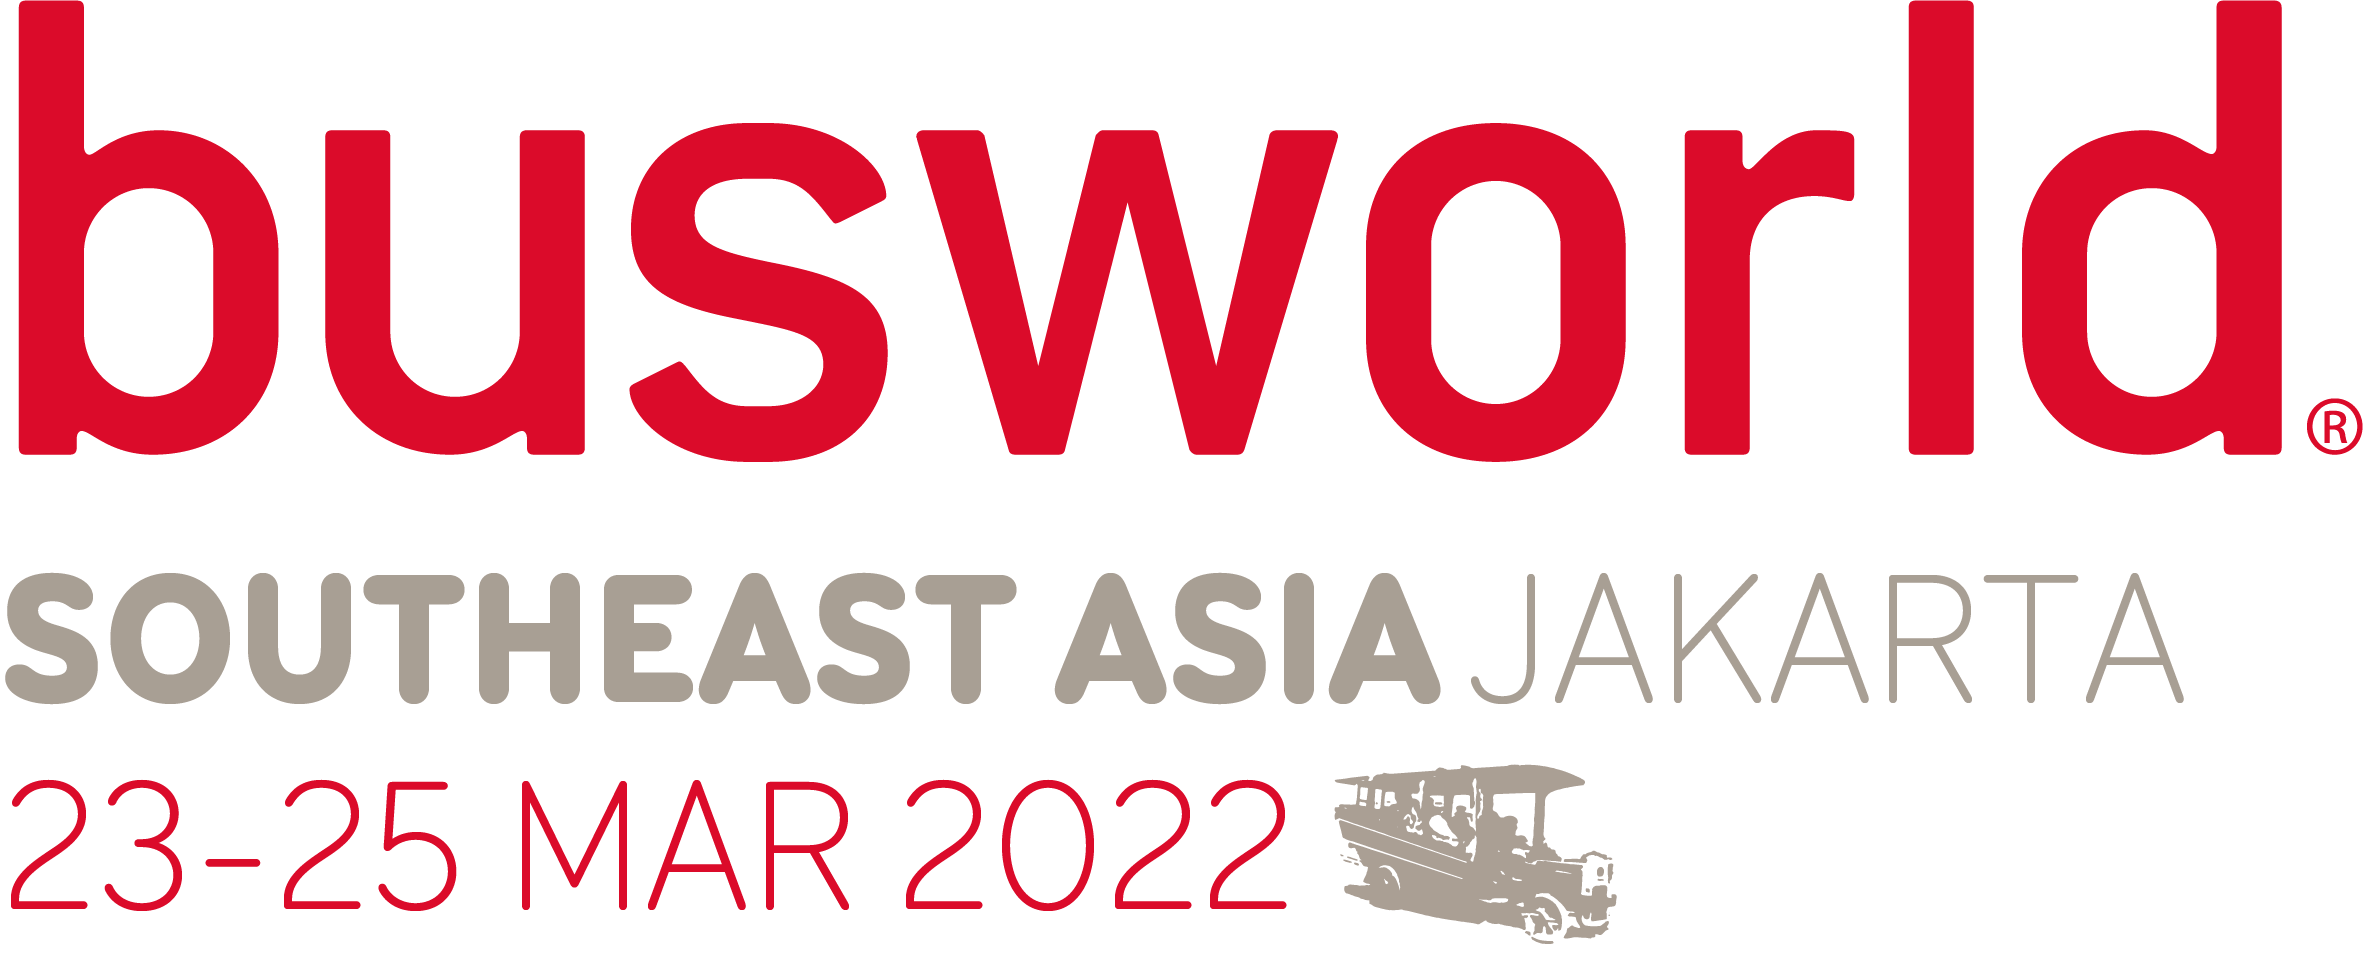 Busworld Southeast Asia 2022 logo